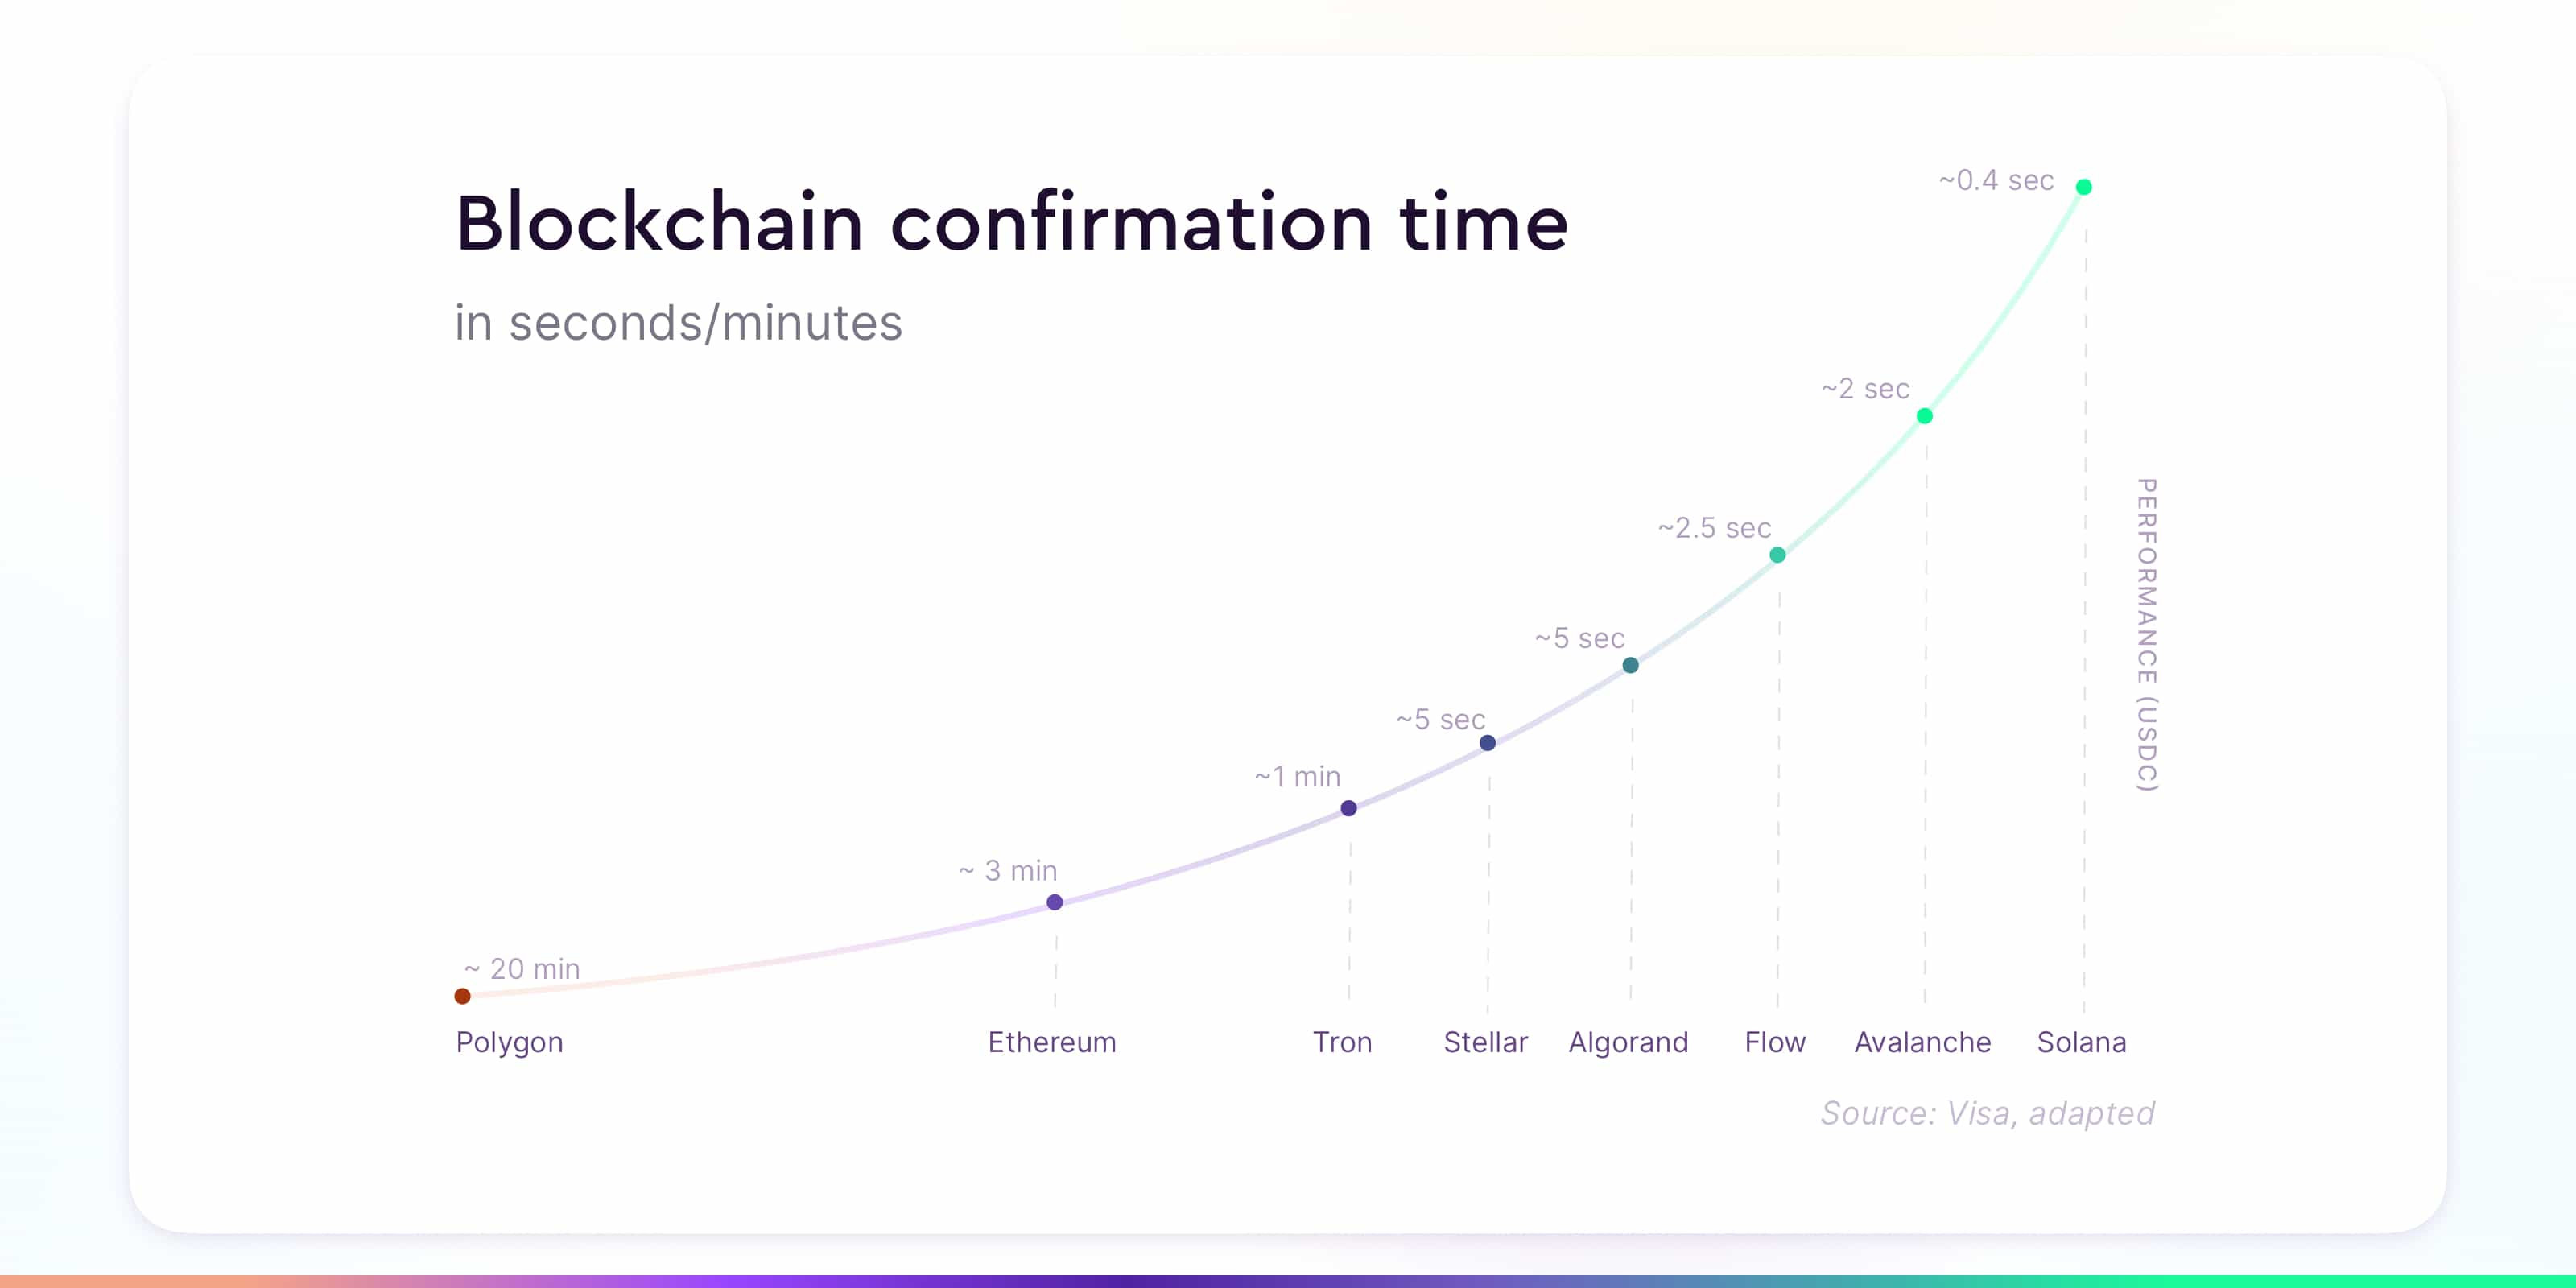 blockchain confirmation time solana vs other blockchains